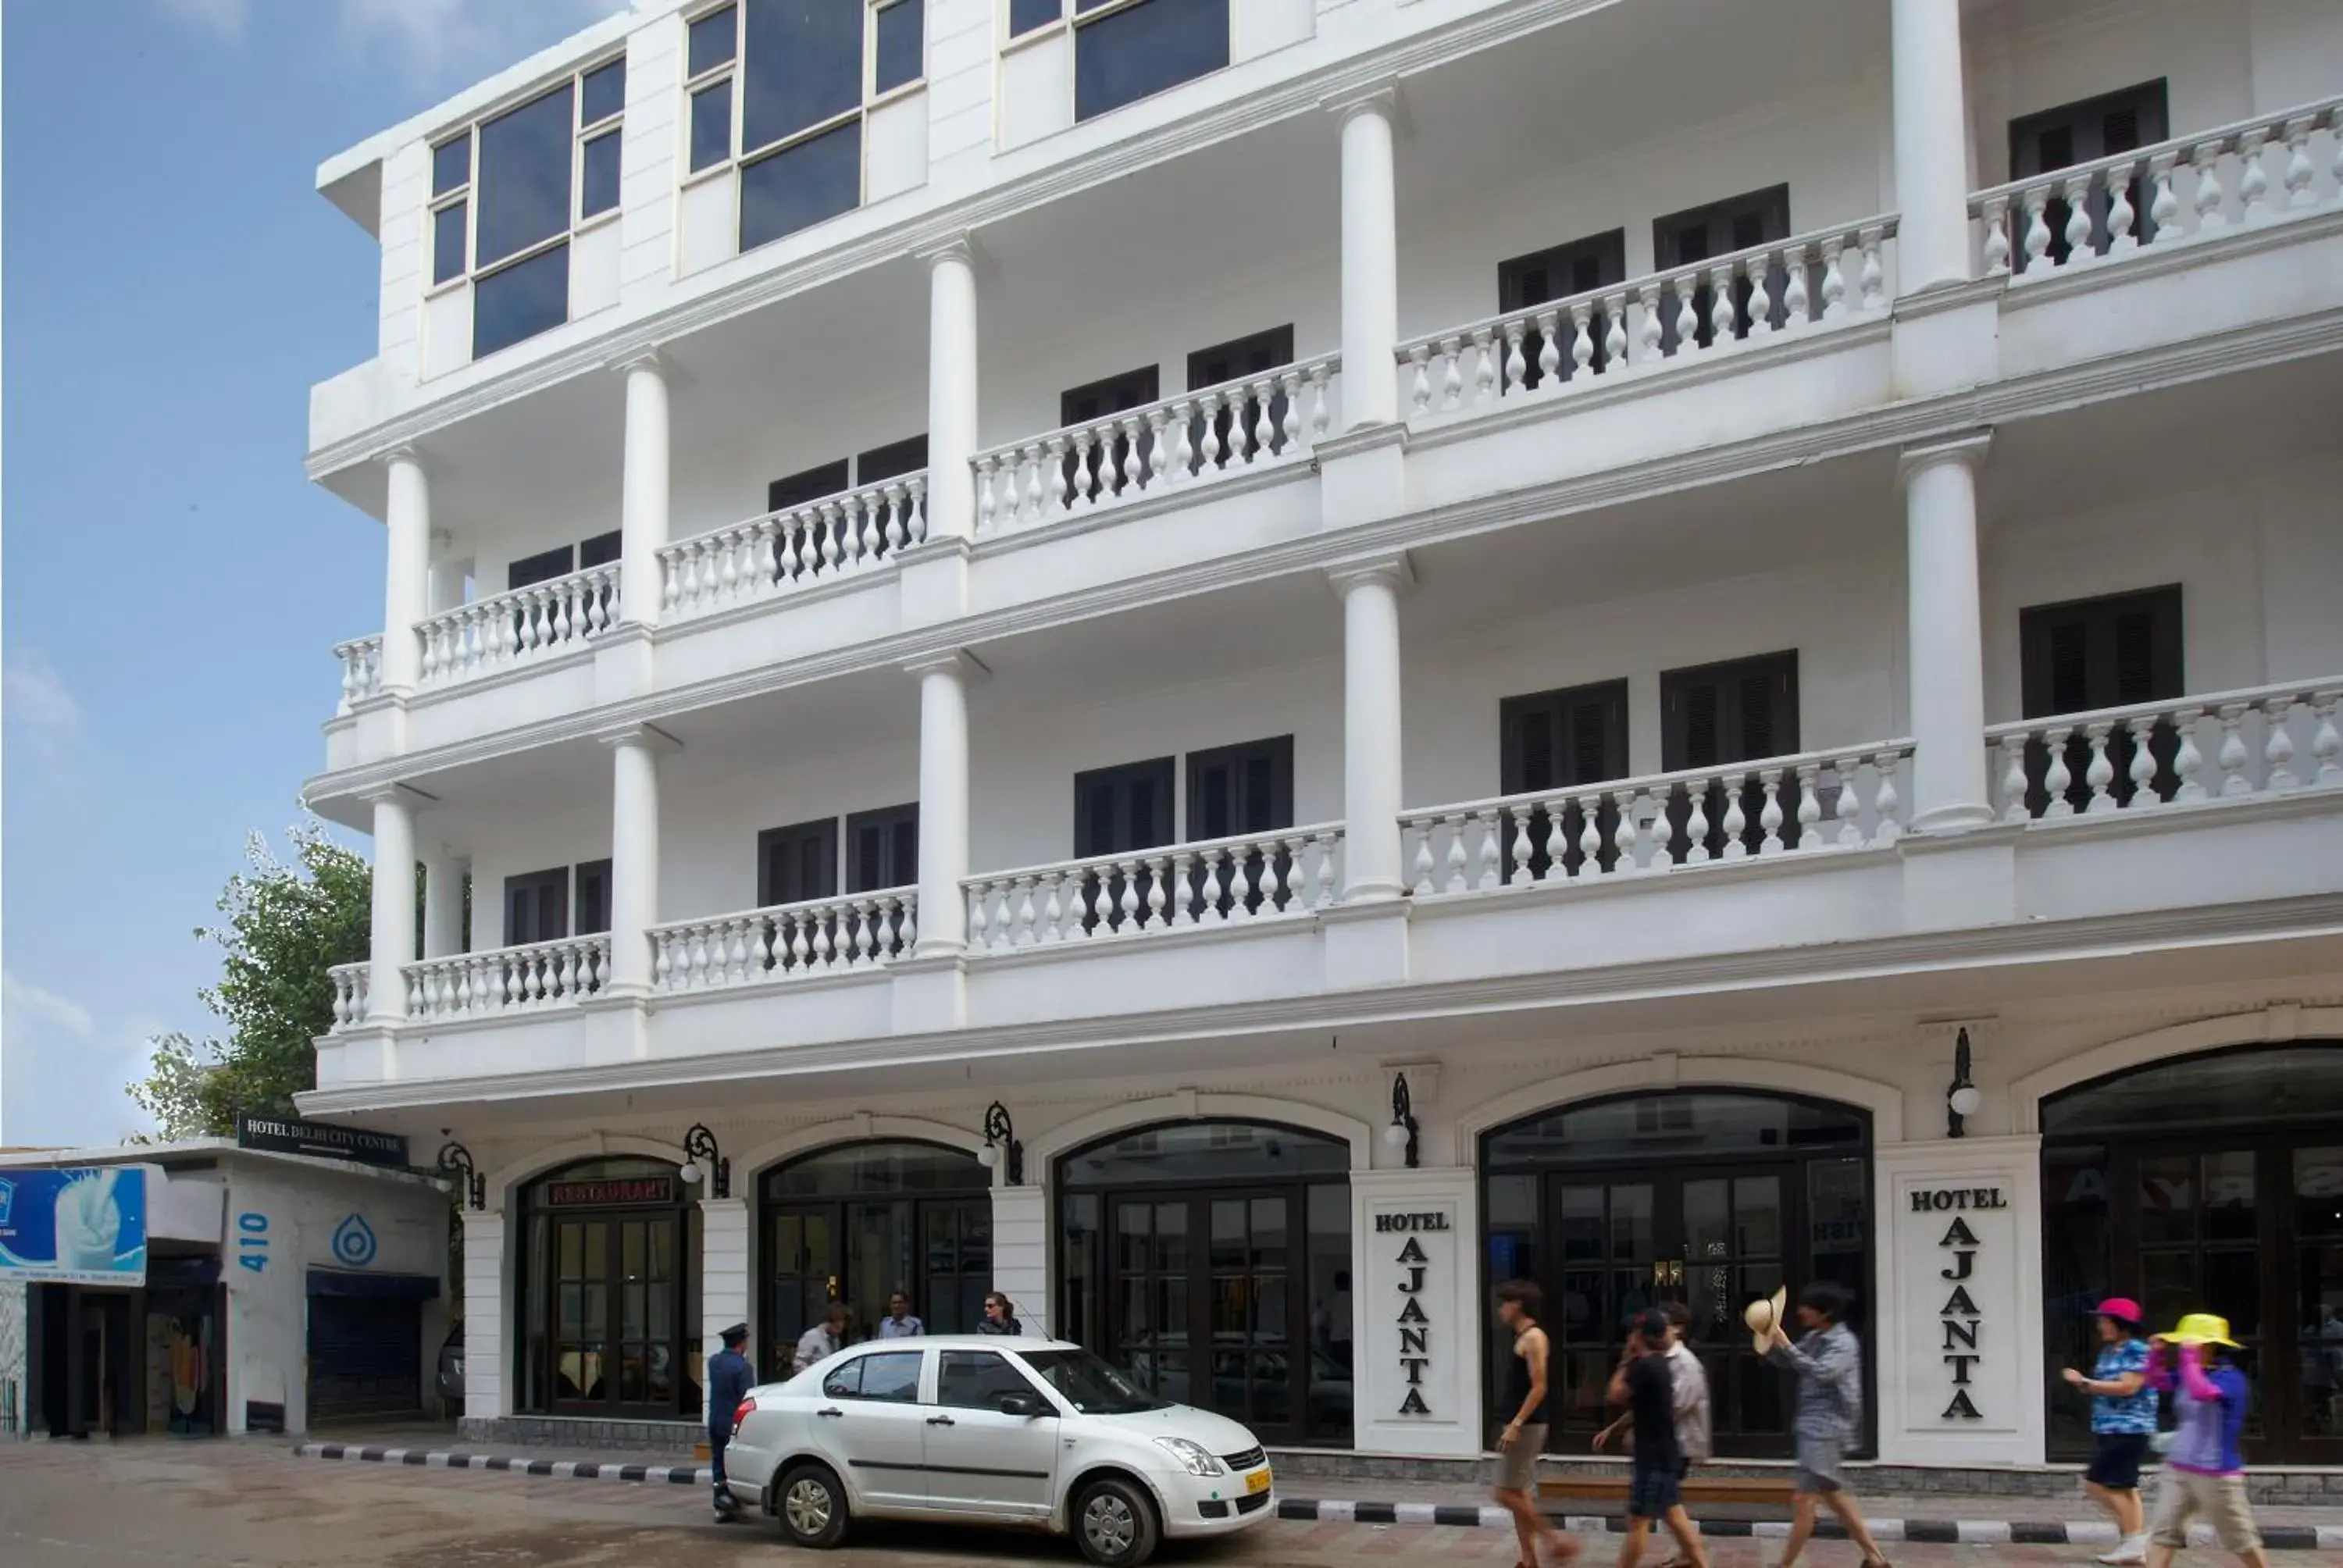 Facade/entrance in Hotel Ajanta